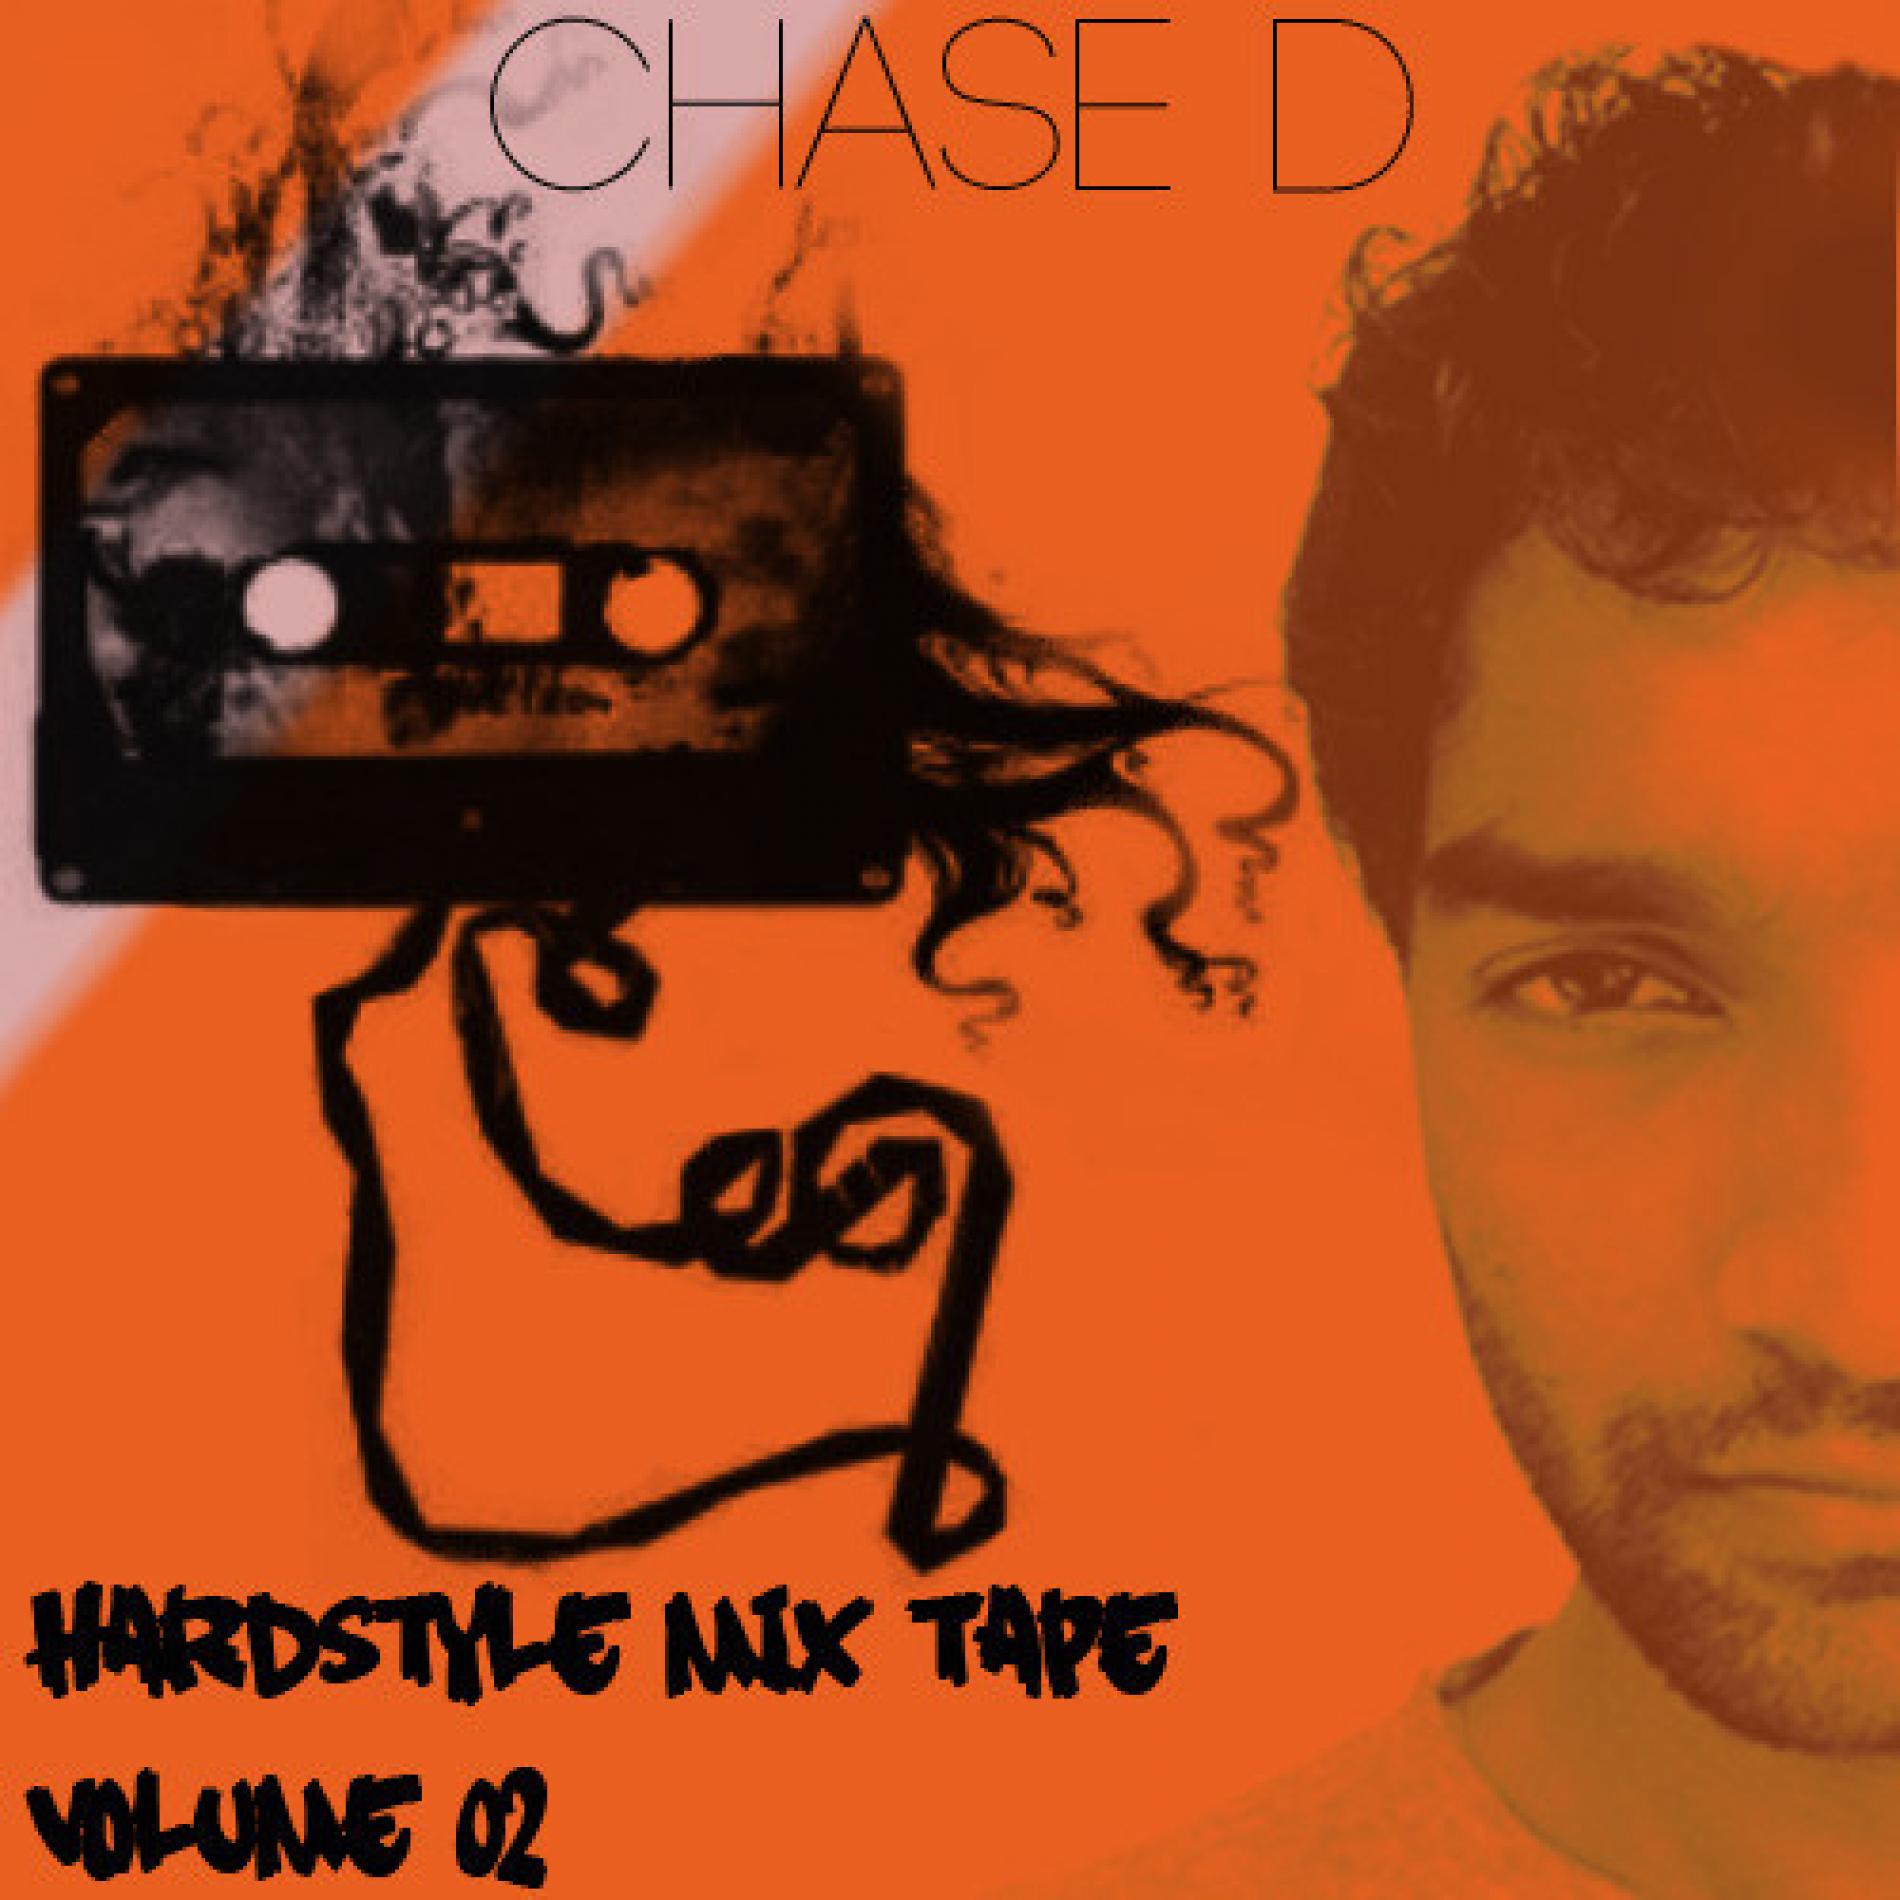 Chase D’s Hardstyle Mixtape Volume 02